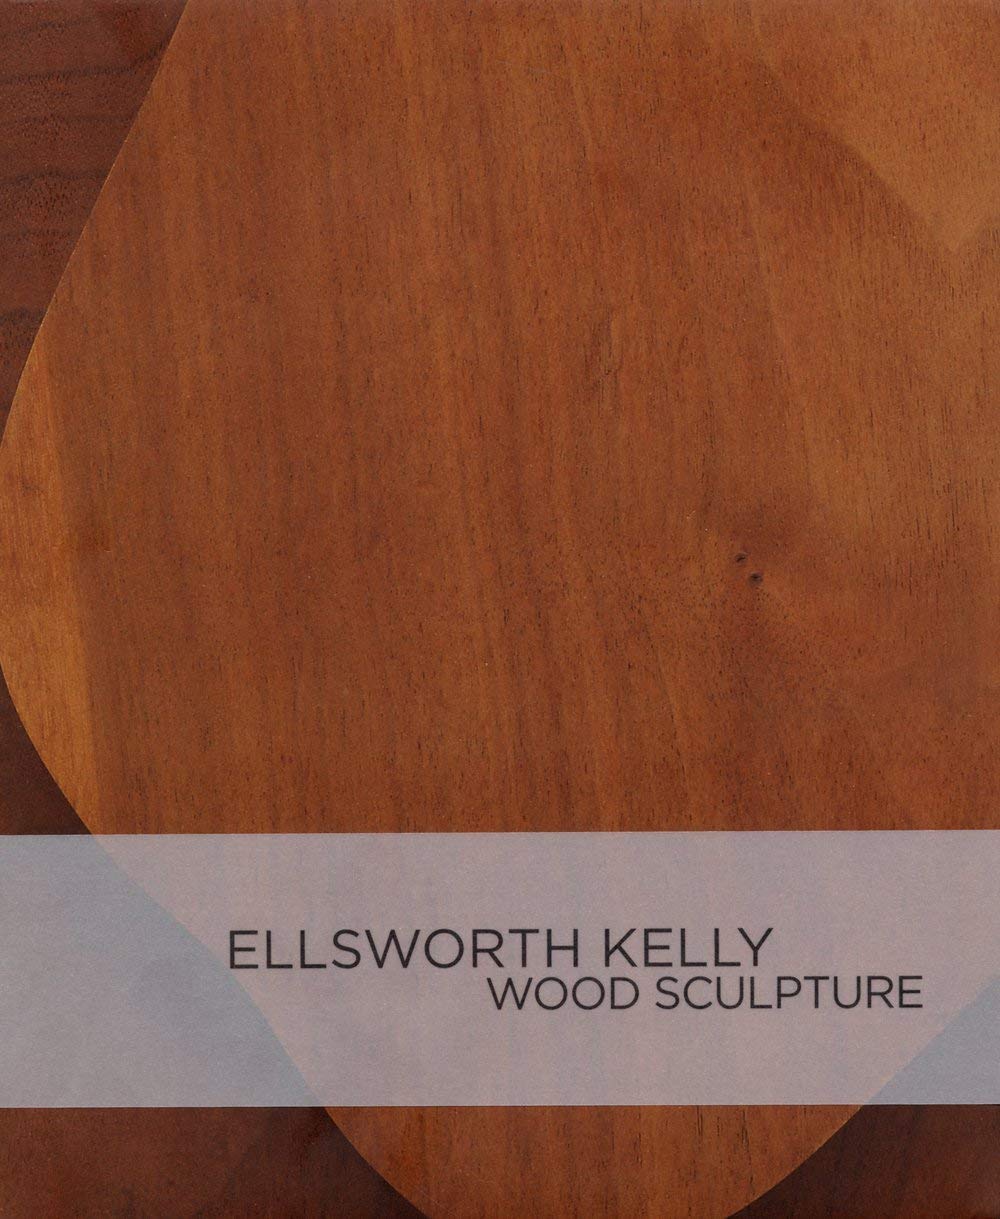 ellsworth kelly wood sculpture Ellsworth Kelly - Wood Sculpture